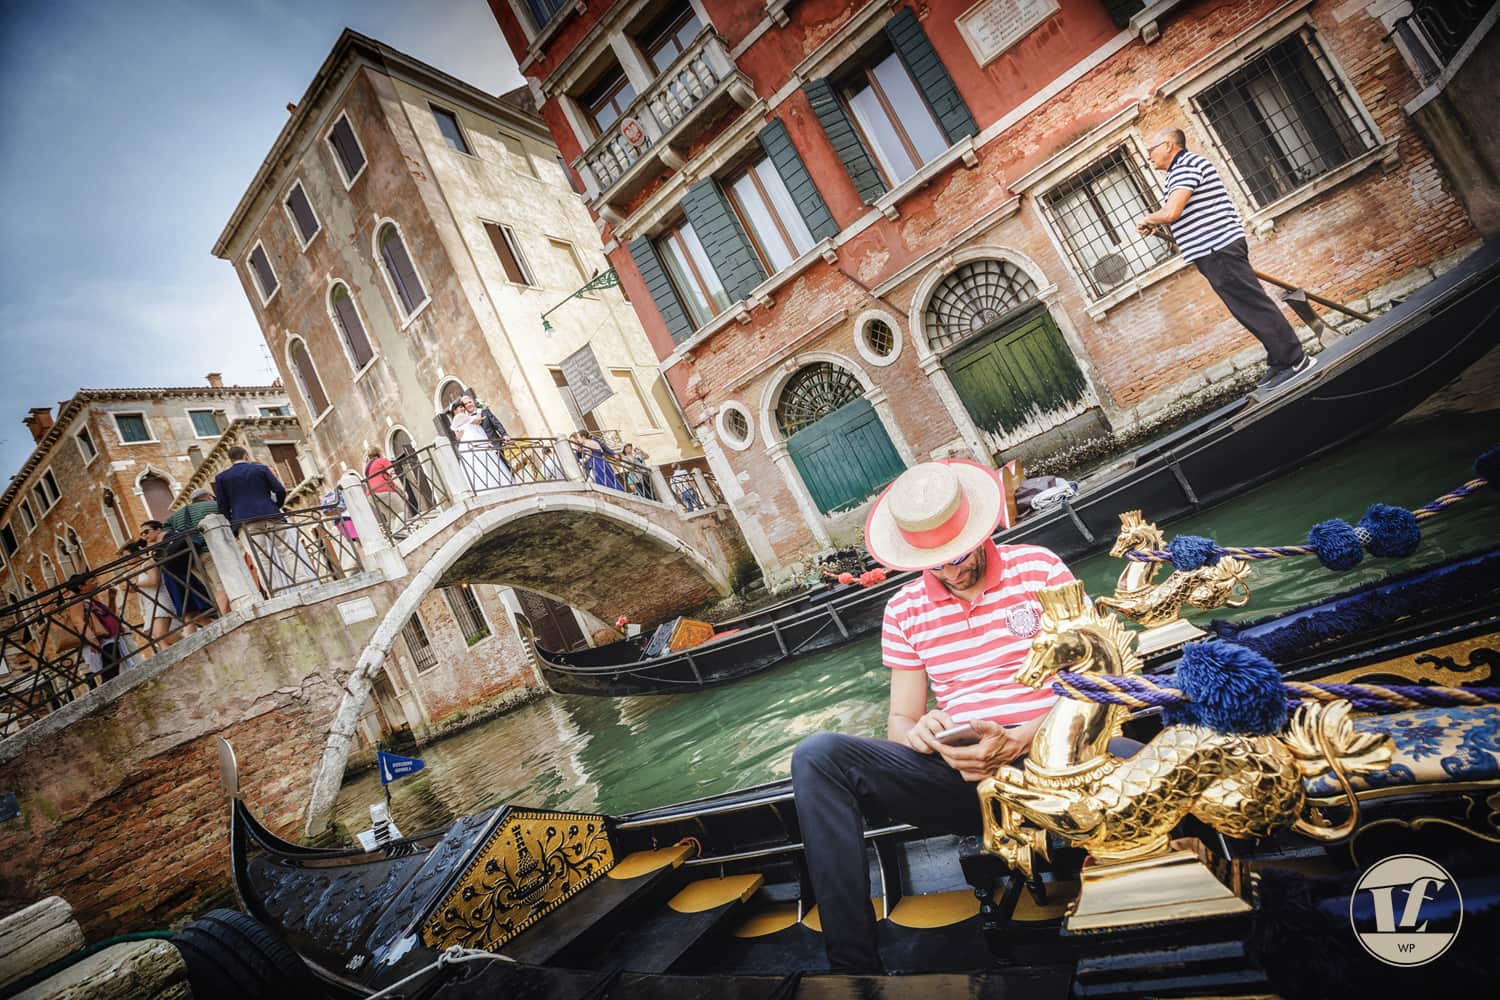 fotografo matrimoni Venezia, Treviso, lago di Garda